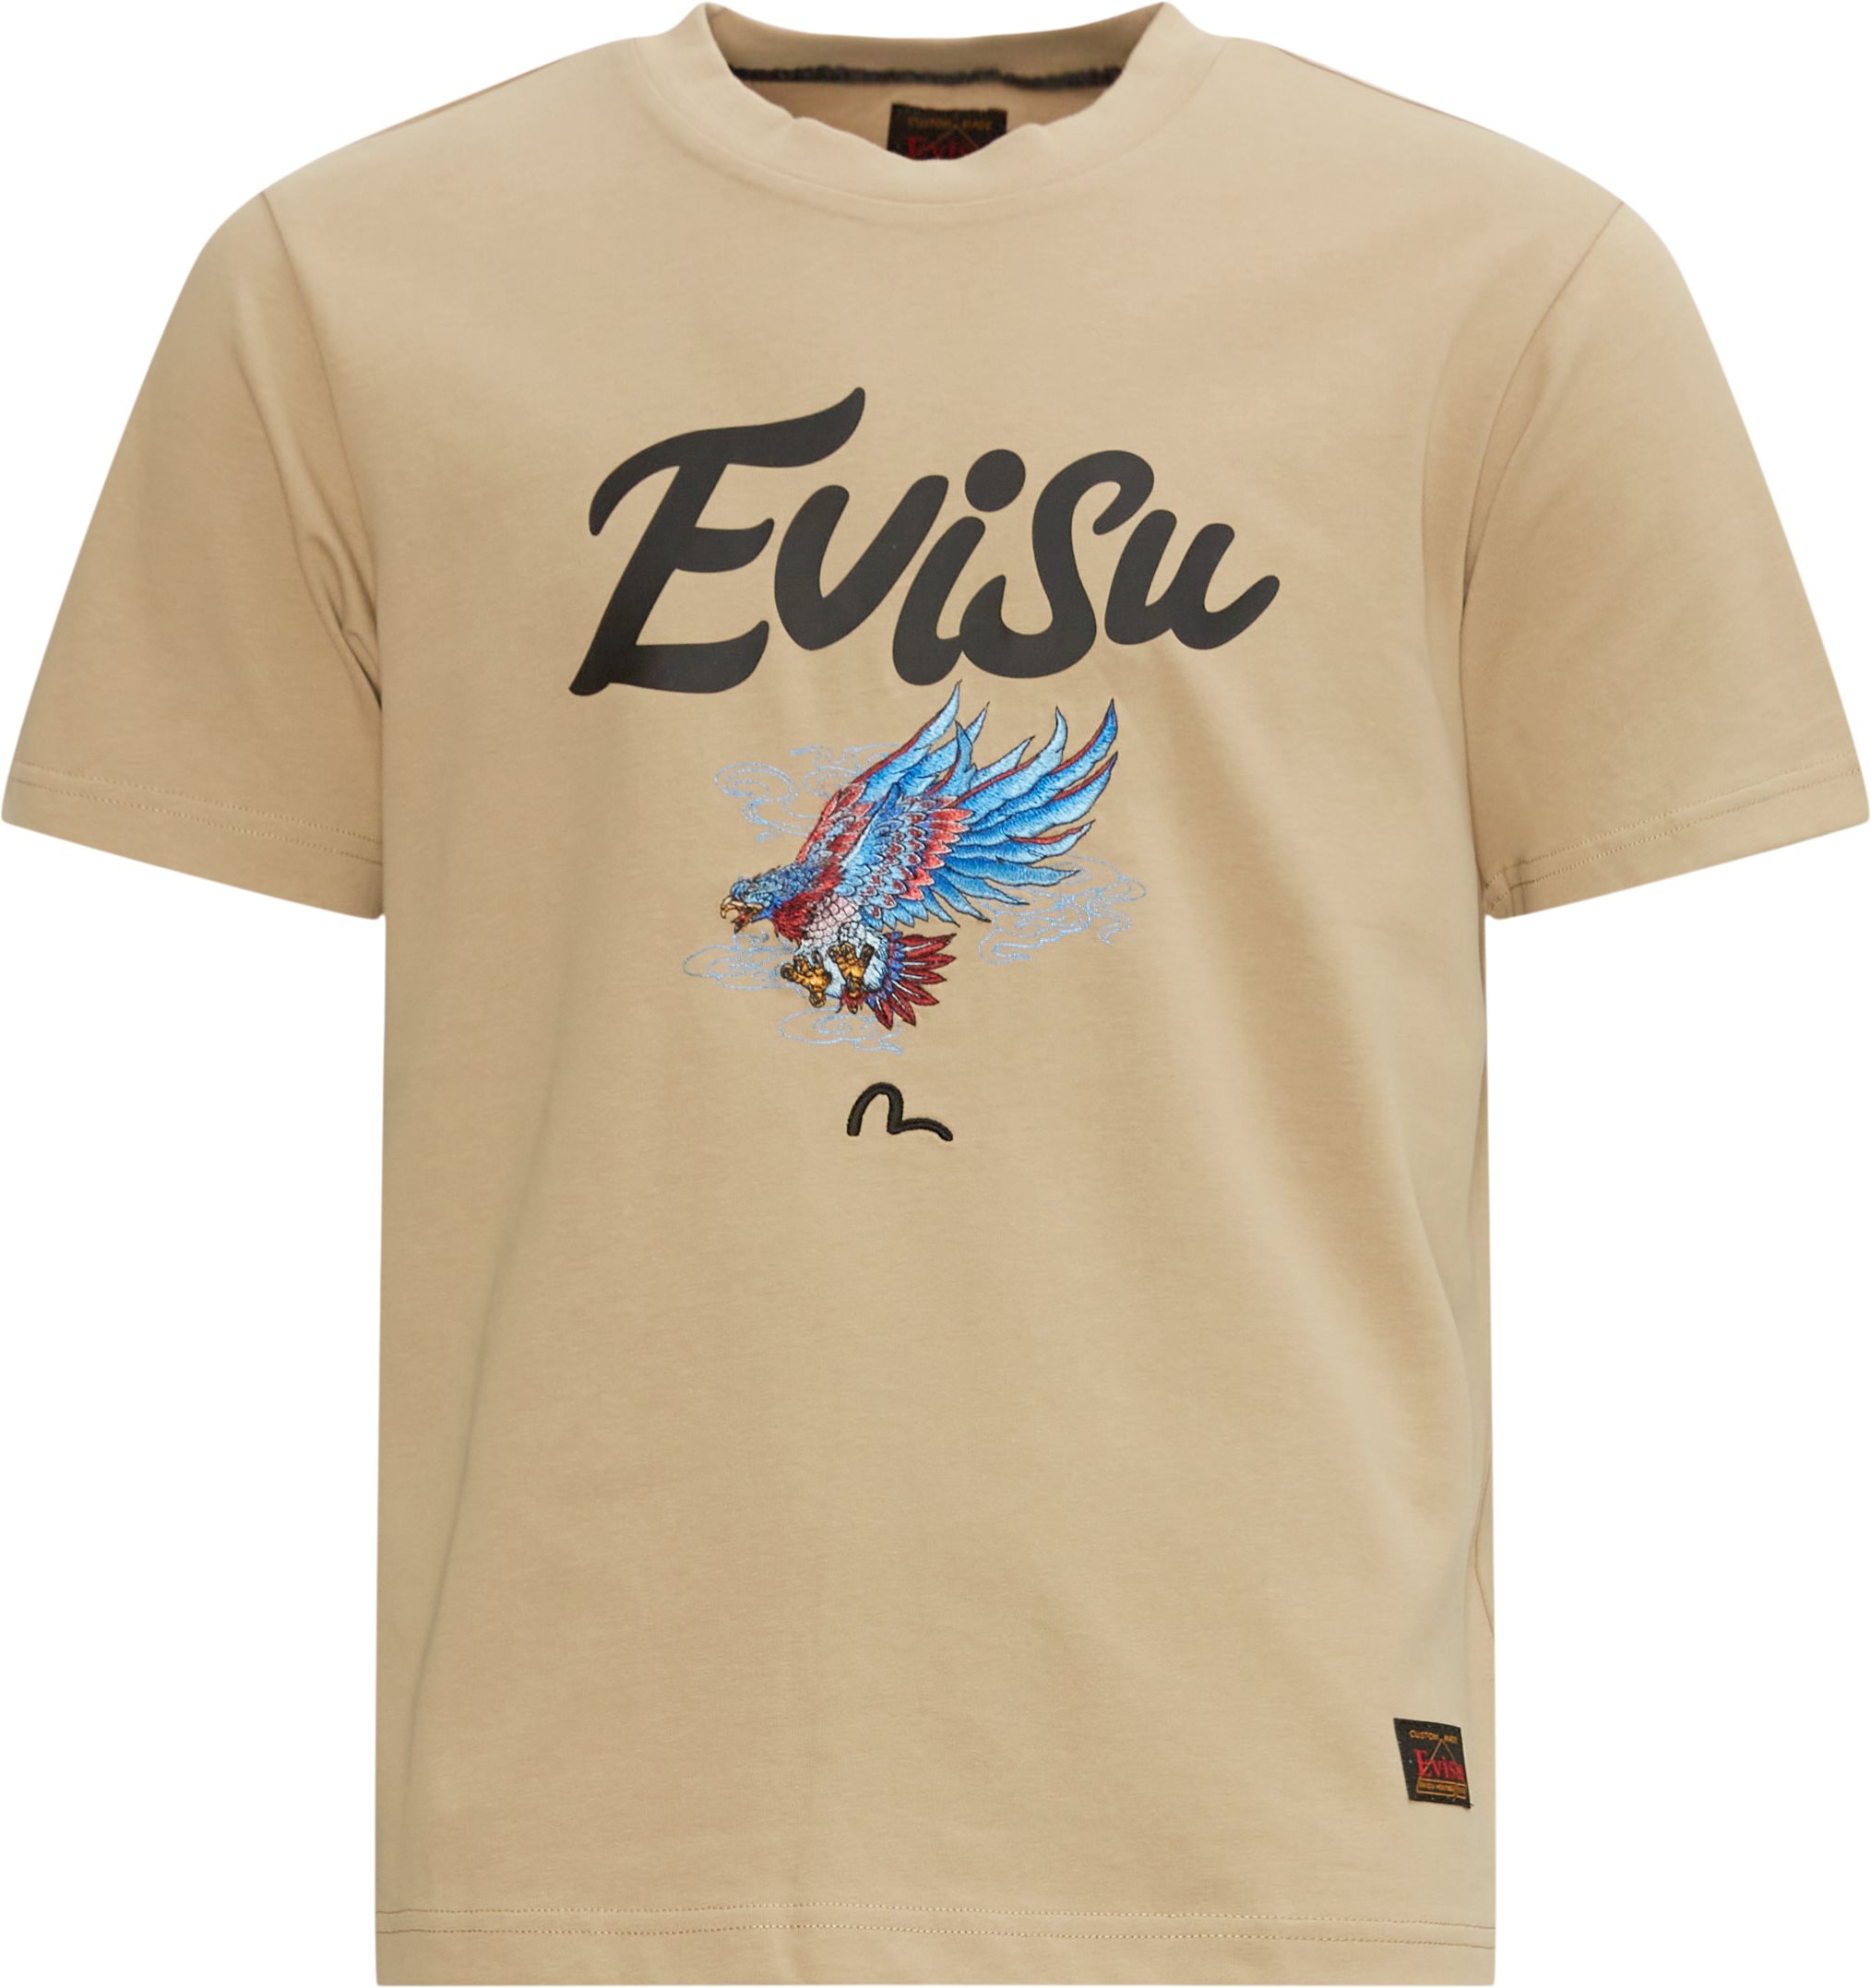 EUR 80 2ESHTM3TS518XXCTC SAND T-shirts EVISU from